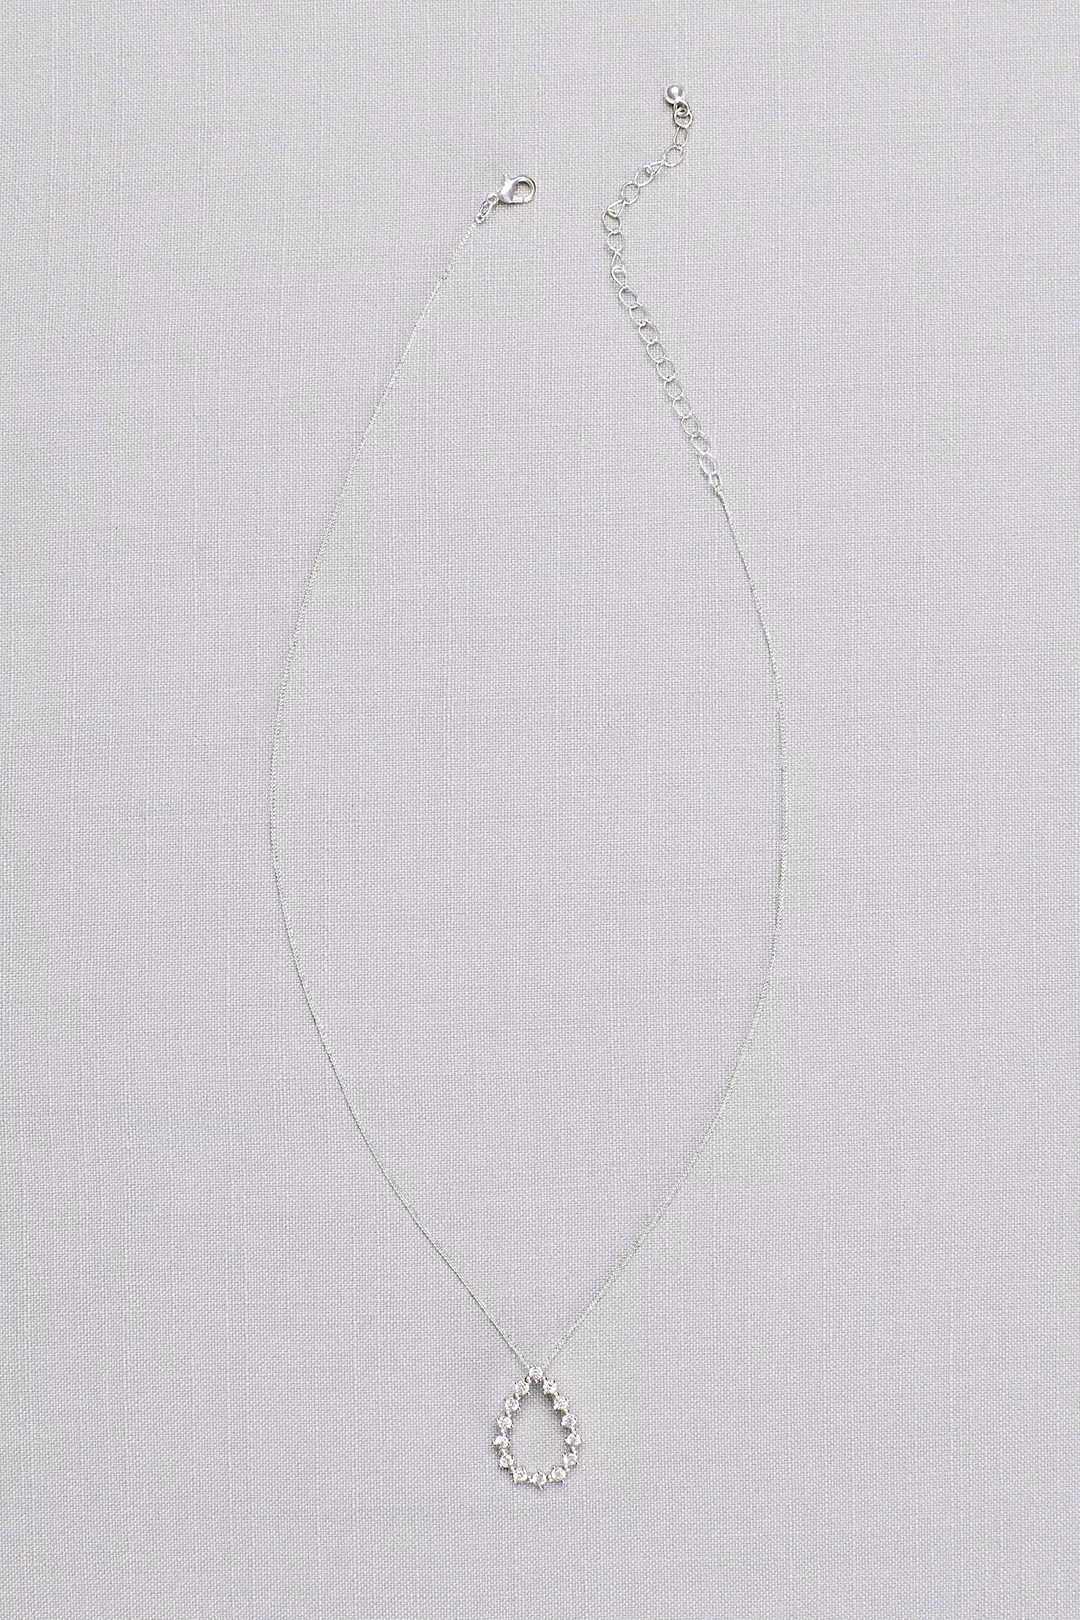 Crystal Teardrop Silhouette Necklace  Image